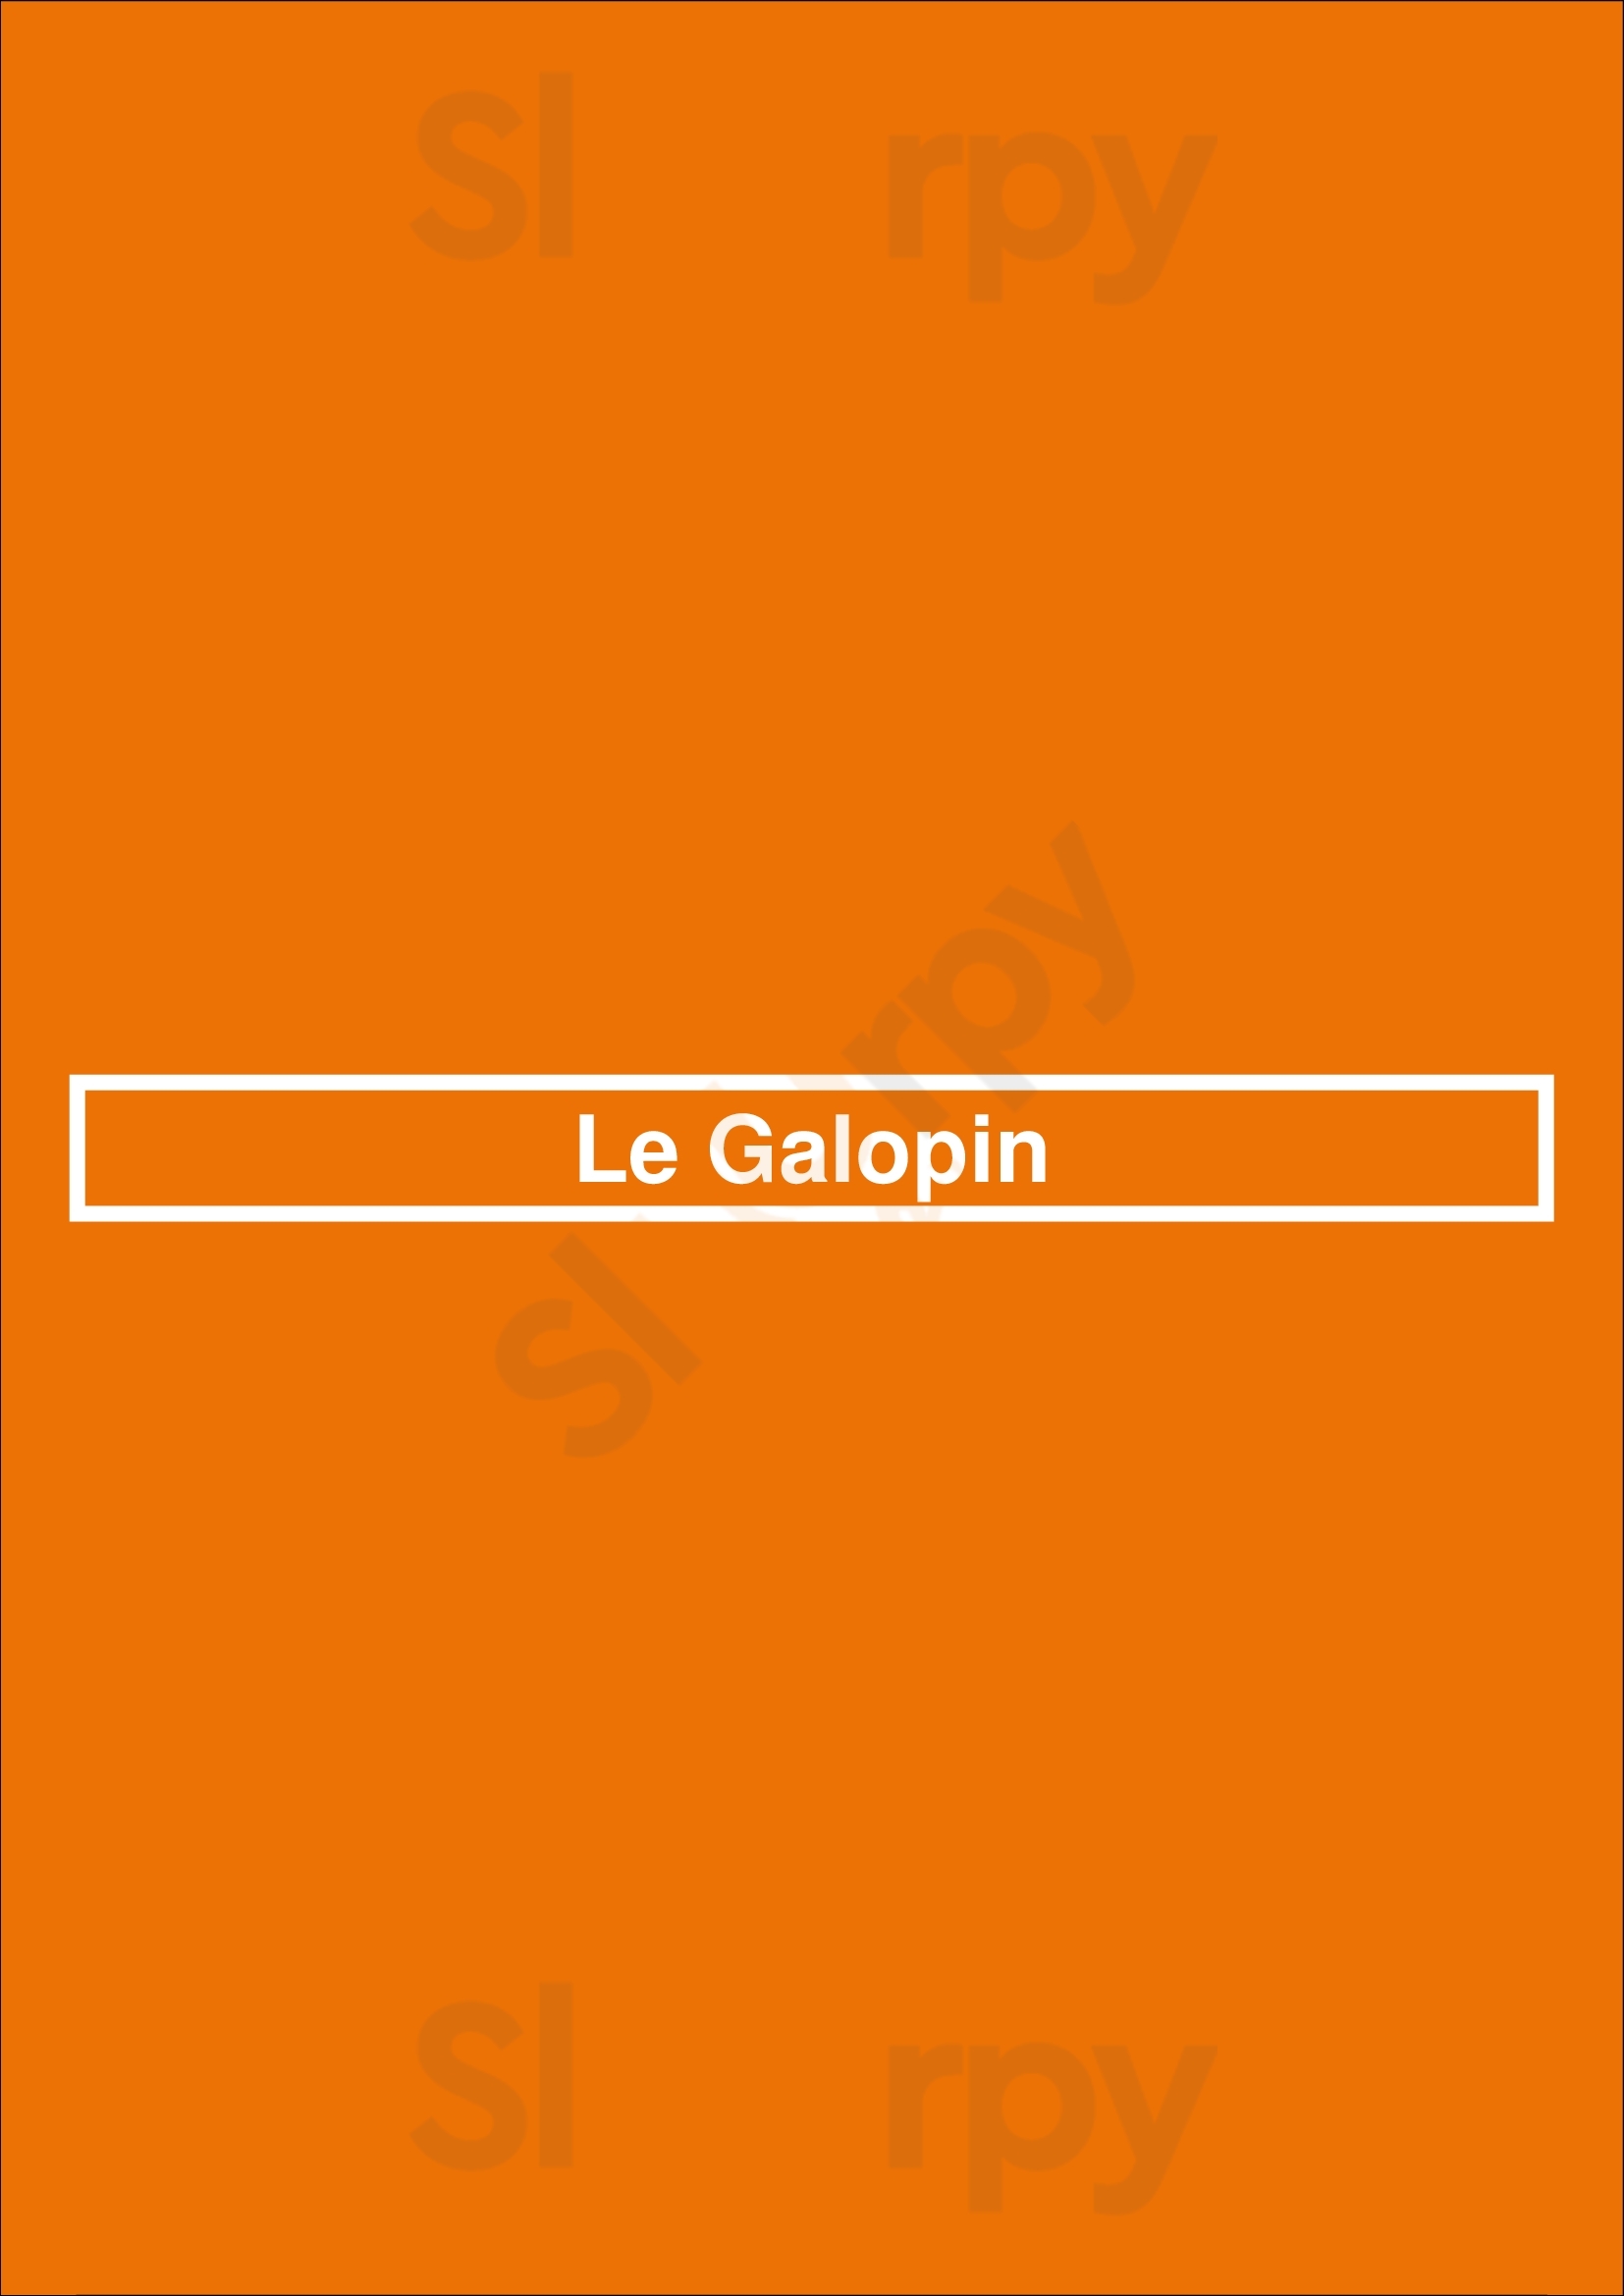 Le Galopin Paris Menu - 1